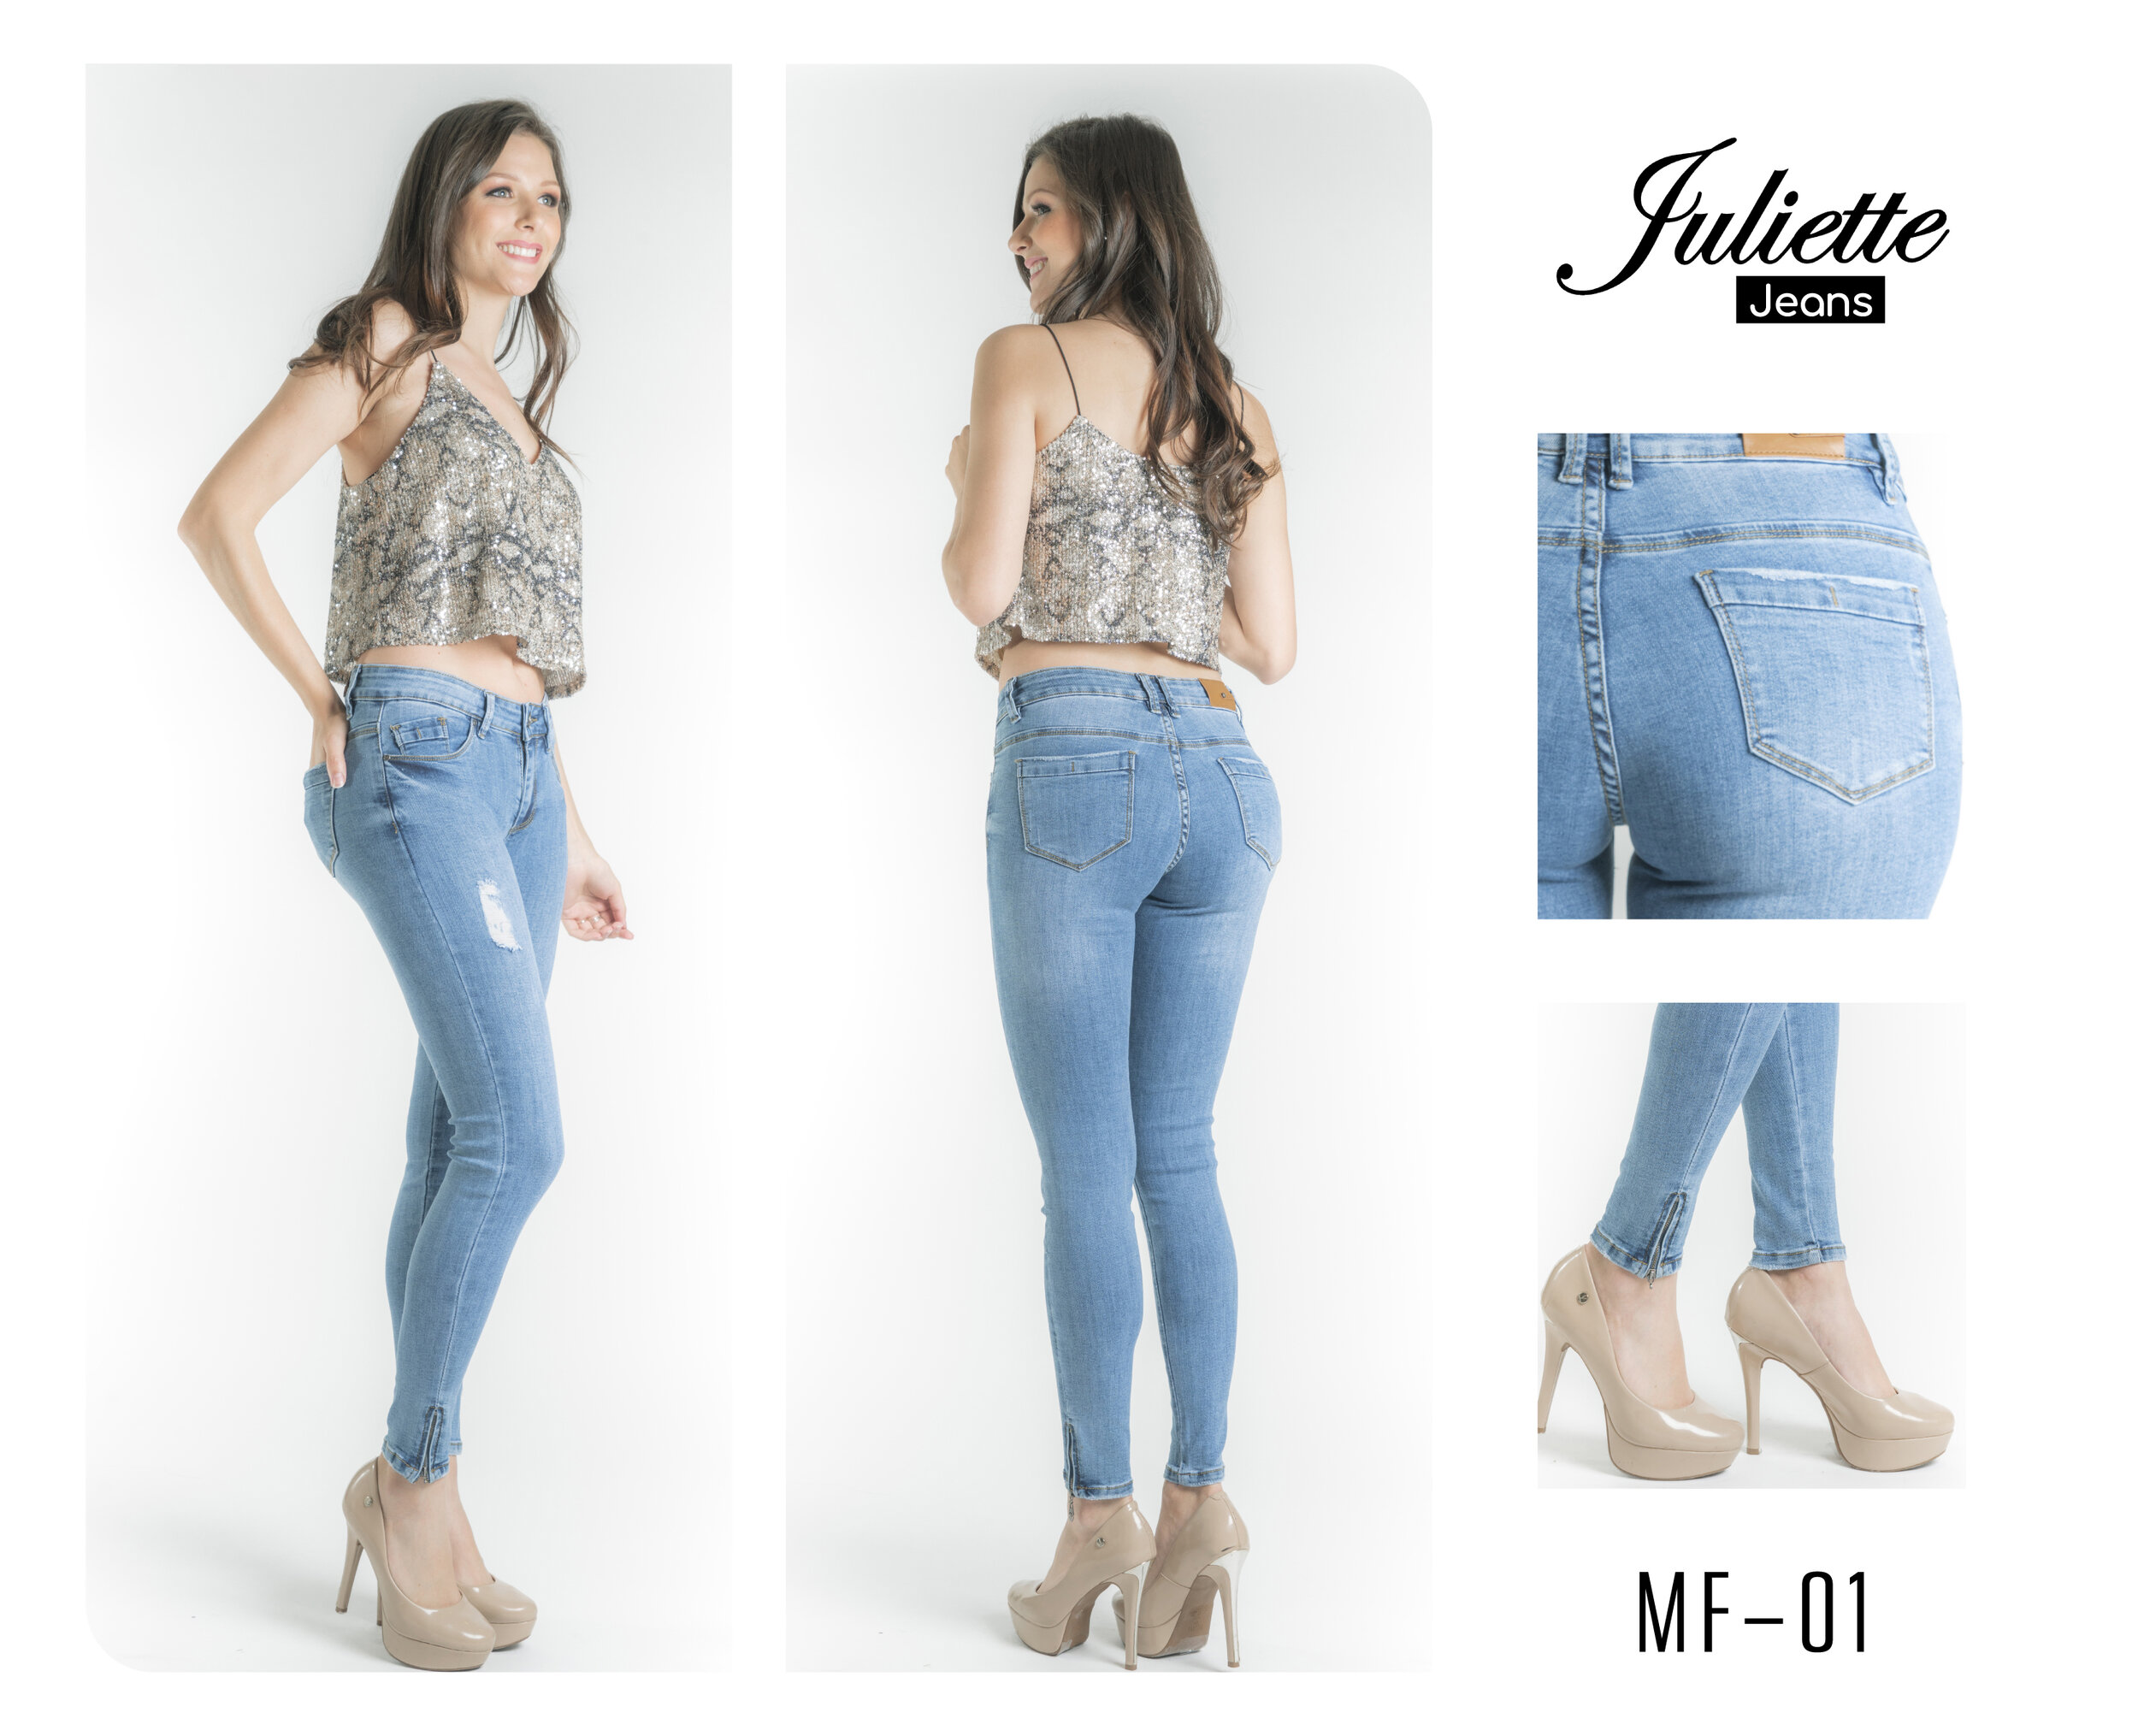 pantalones Juliette_MF-01 copia-b.jpg